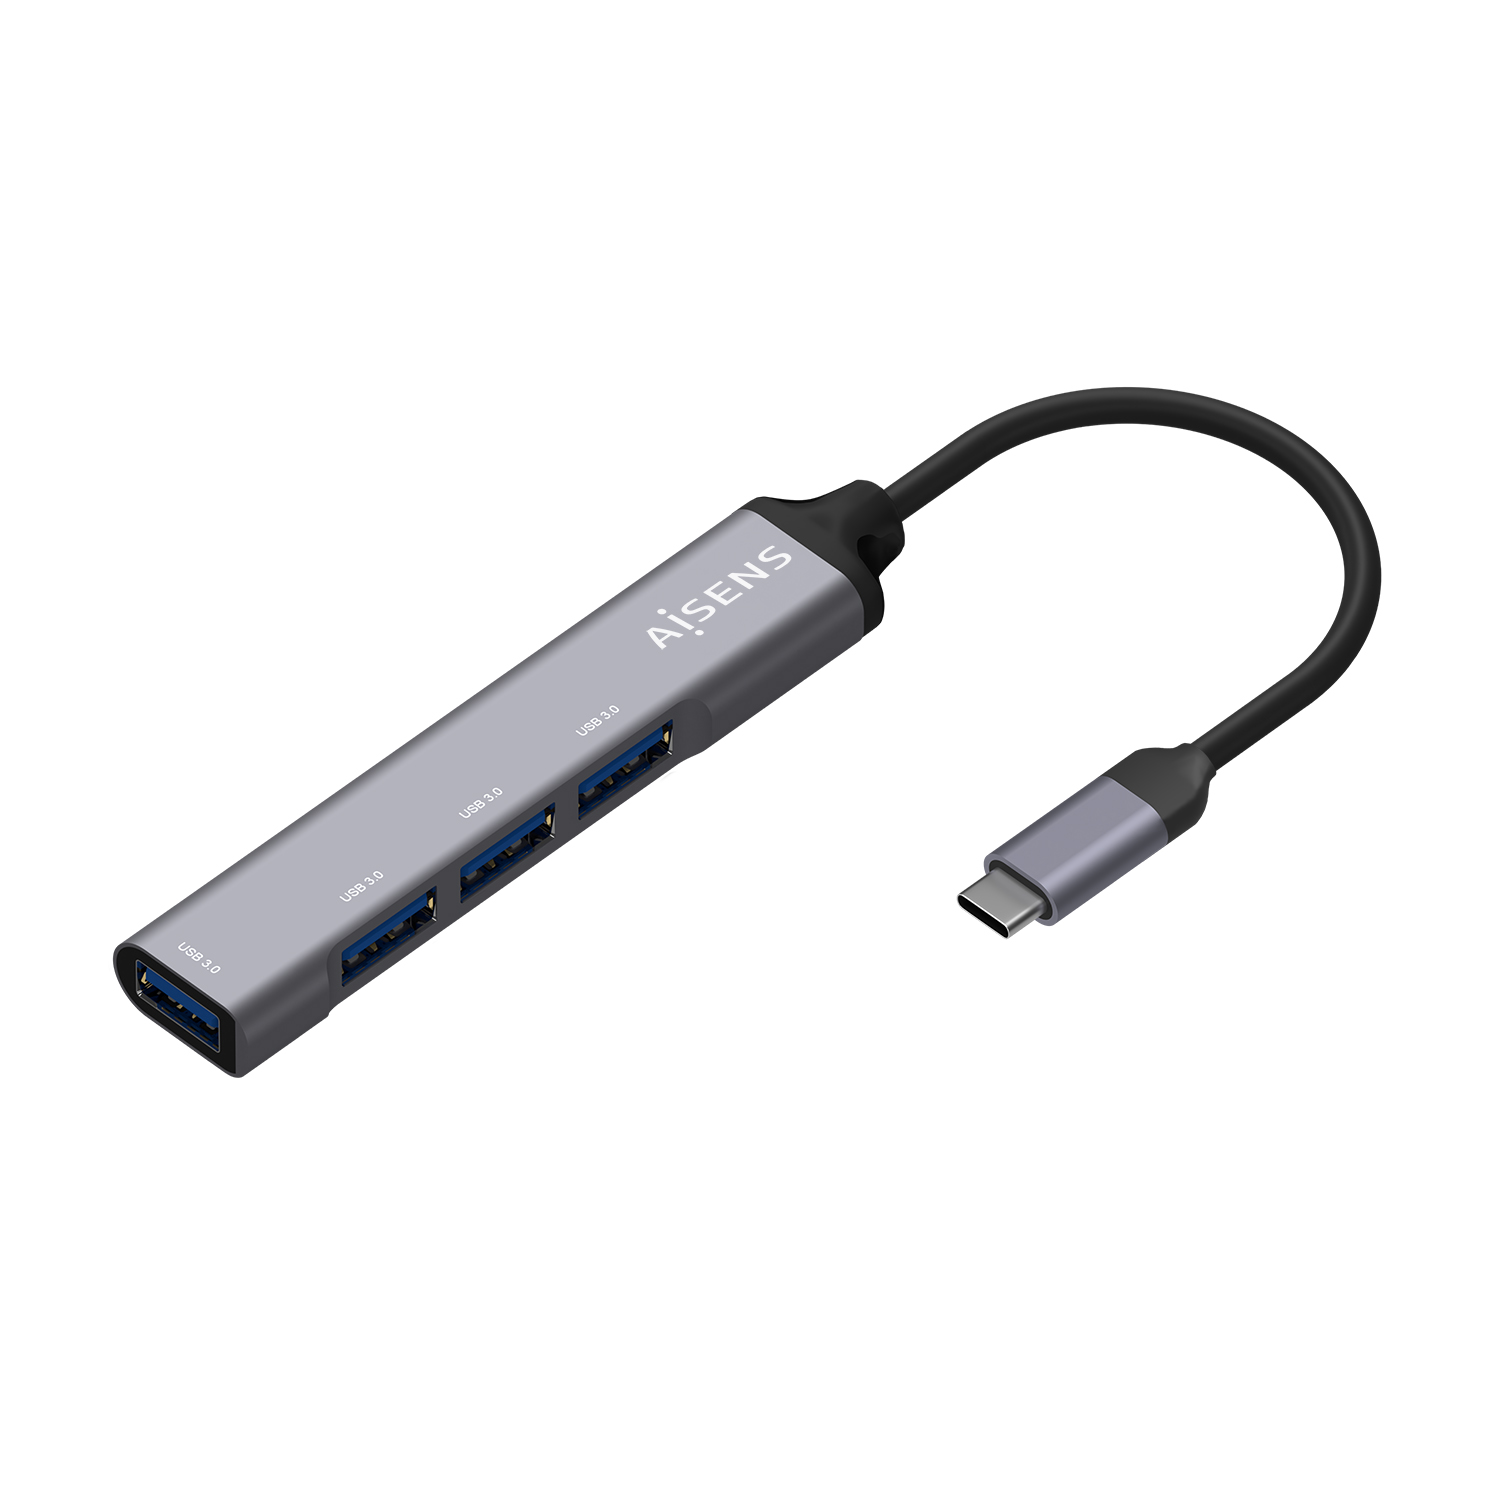 Aisens Hub USB 3.1 USB-C - USB-C Mâle vers 4xType A Femelle - 10cm - Couleur Gris